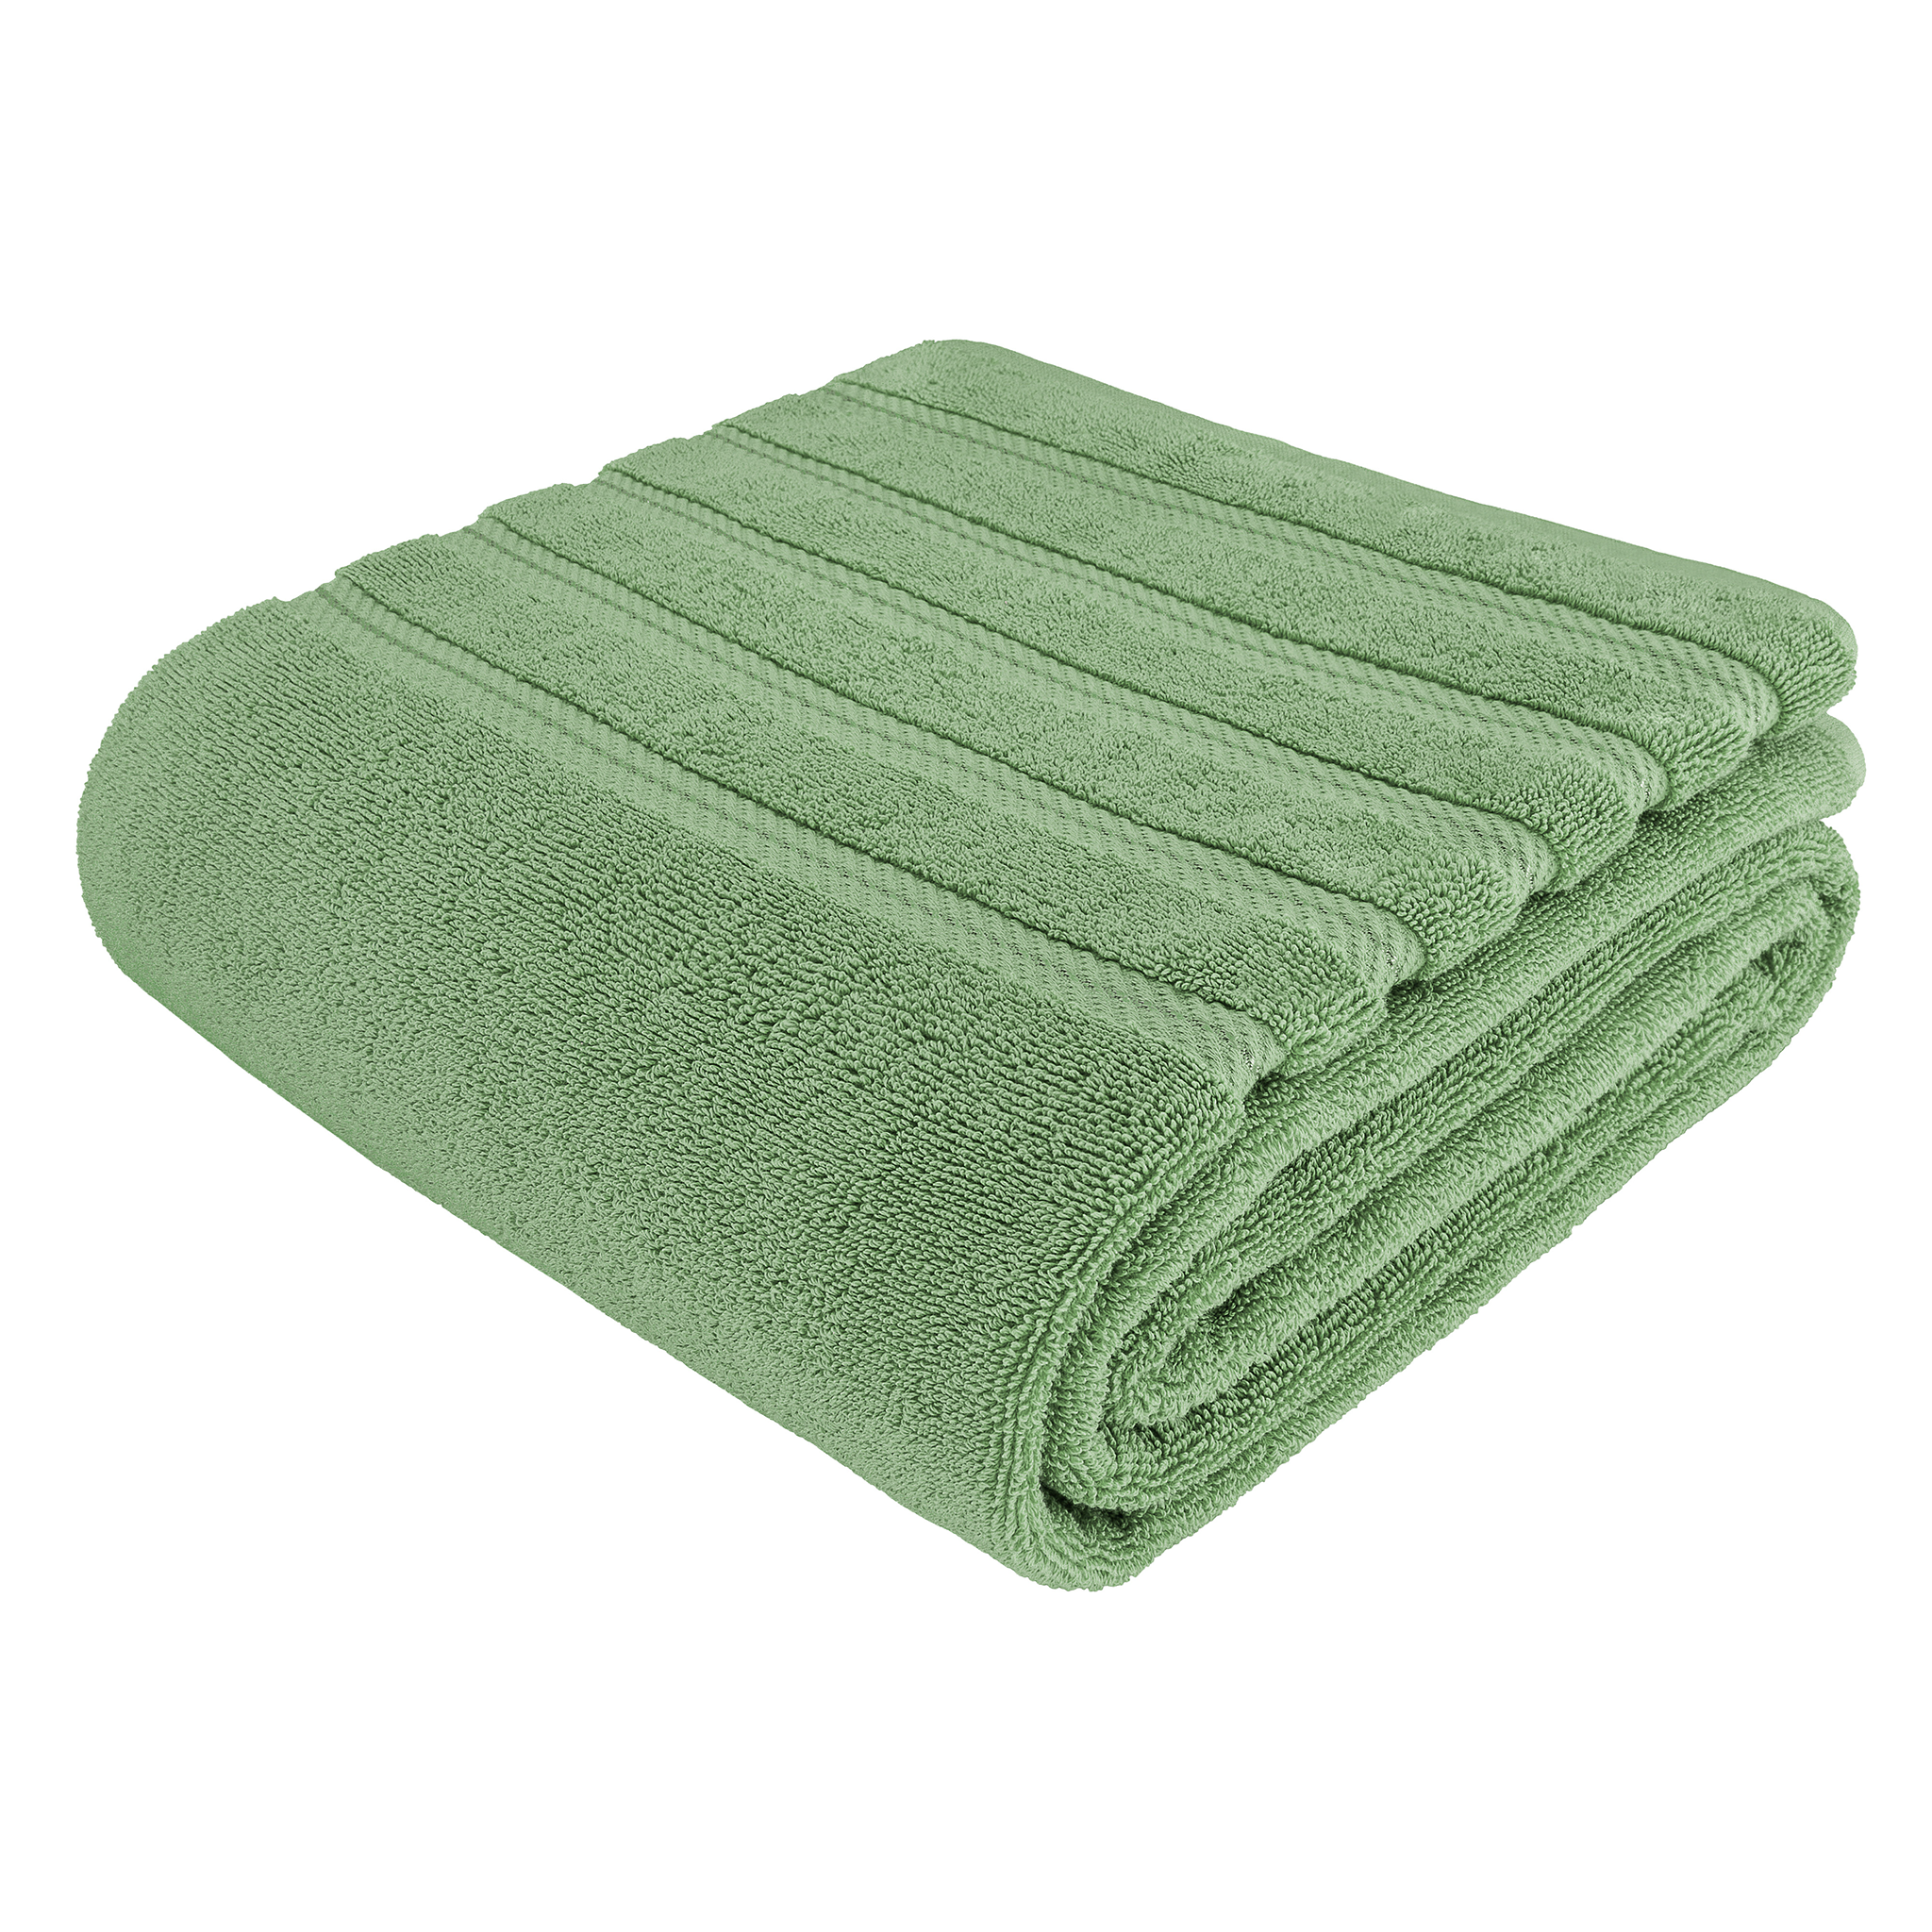 American Soft Linen - 35x70 Jumbo Bath Sheet Turkish Bath Towel - 16 Piece Case Pack - Sage-Green - 7